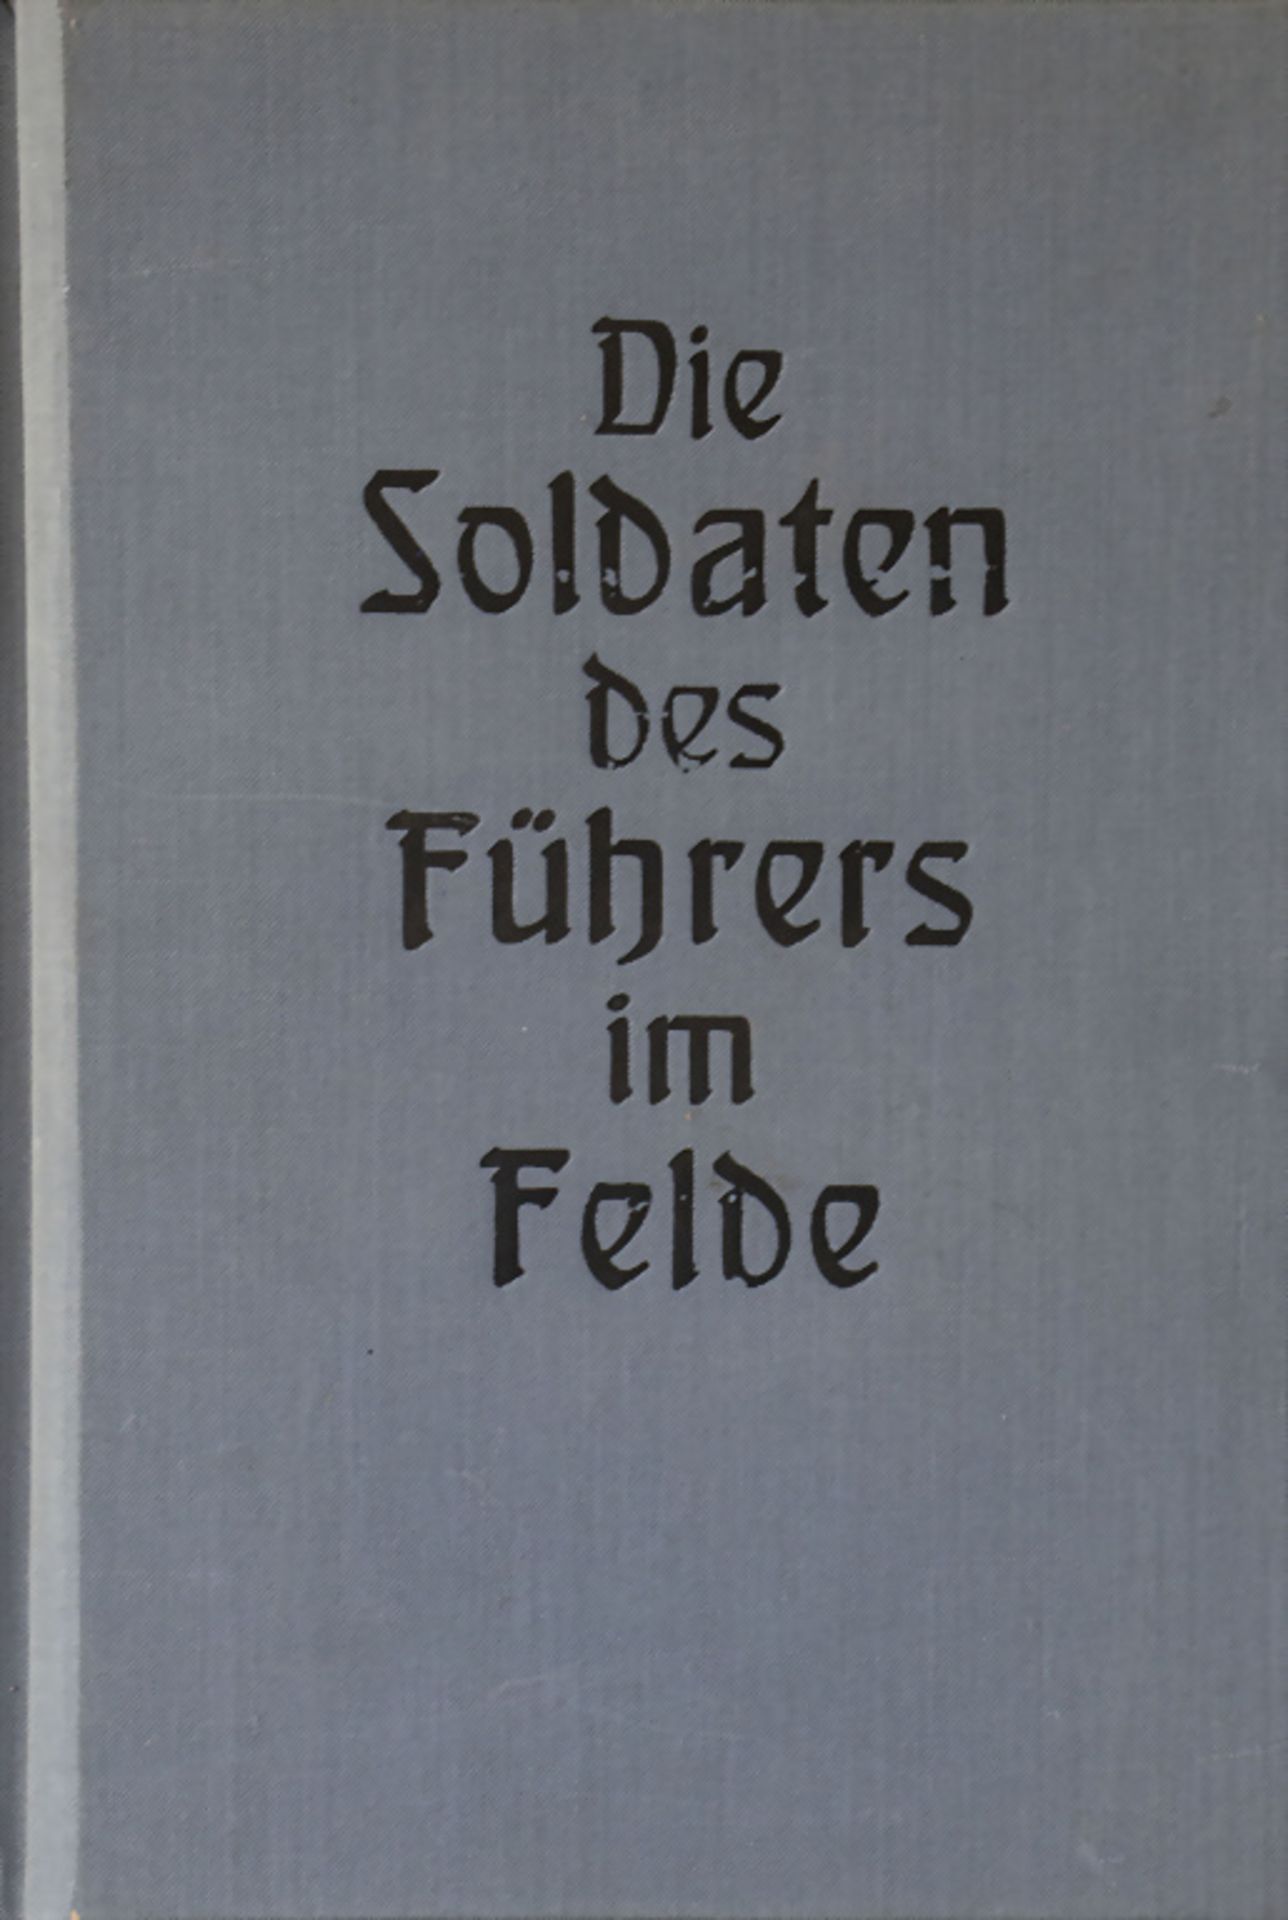 Raumbild-Album / An album of stereoscopic pictures 'Die Soldaten des Führers im Felde', 1940